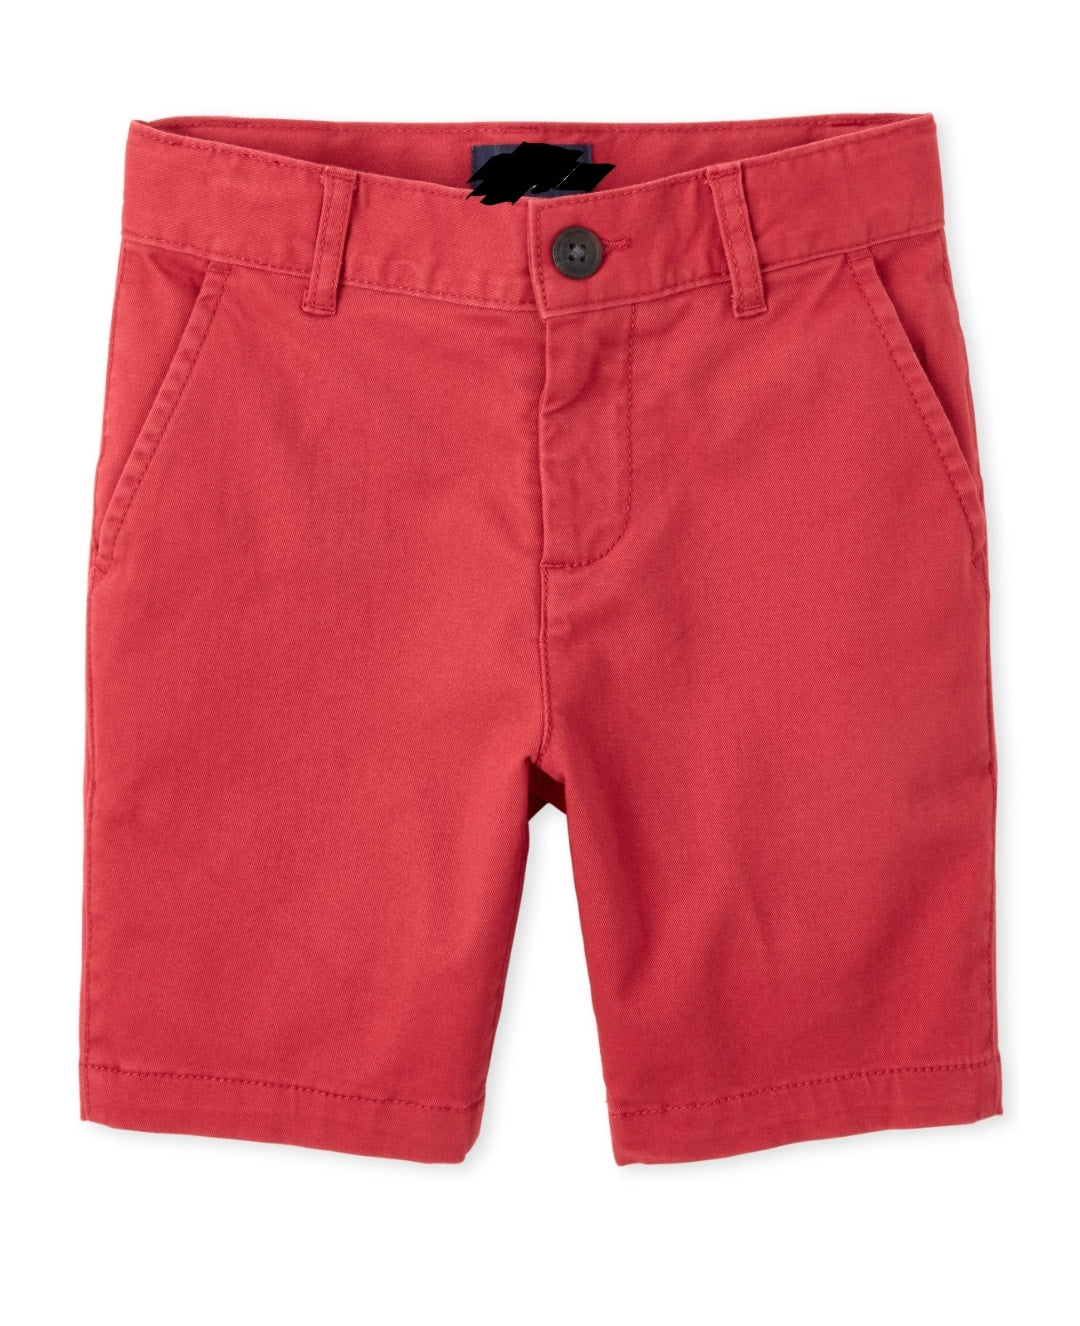 Boys Stretch Chino Shorts - Barn Red